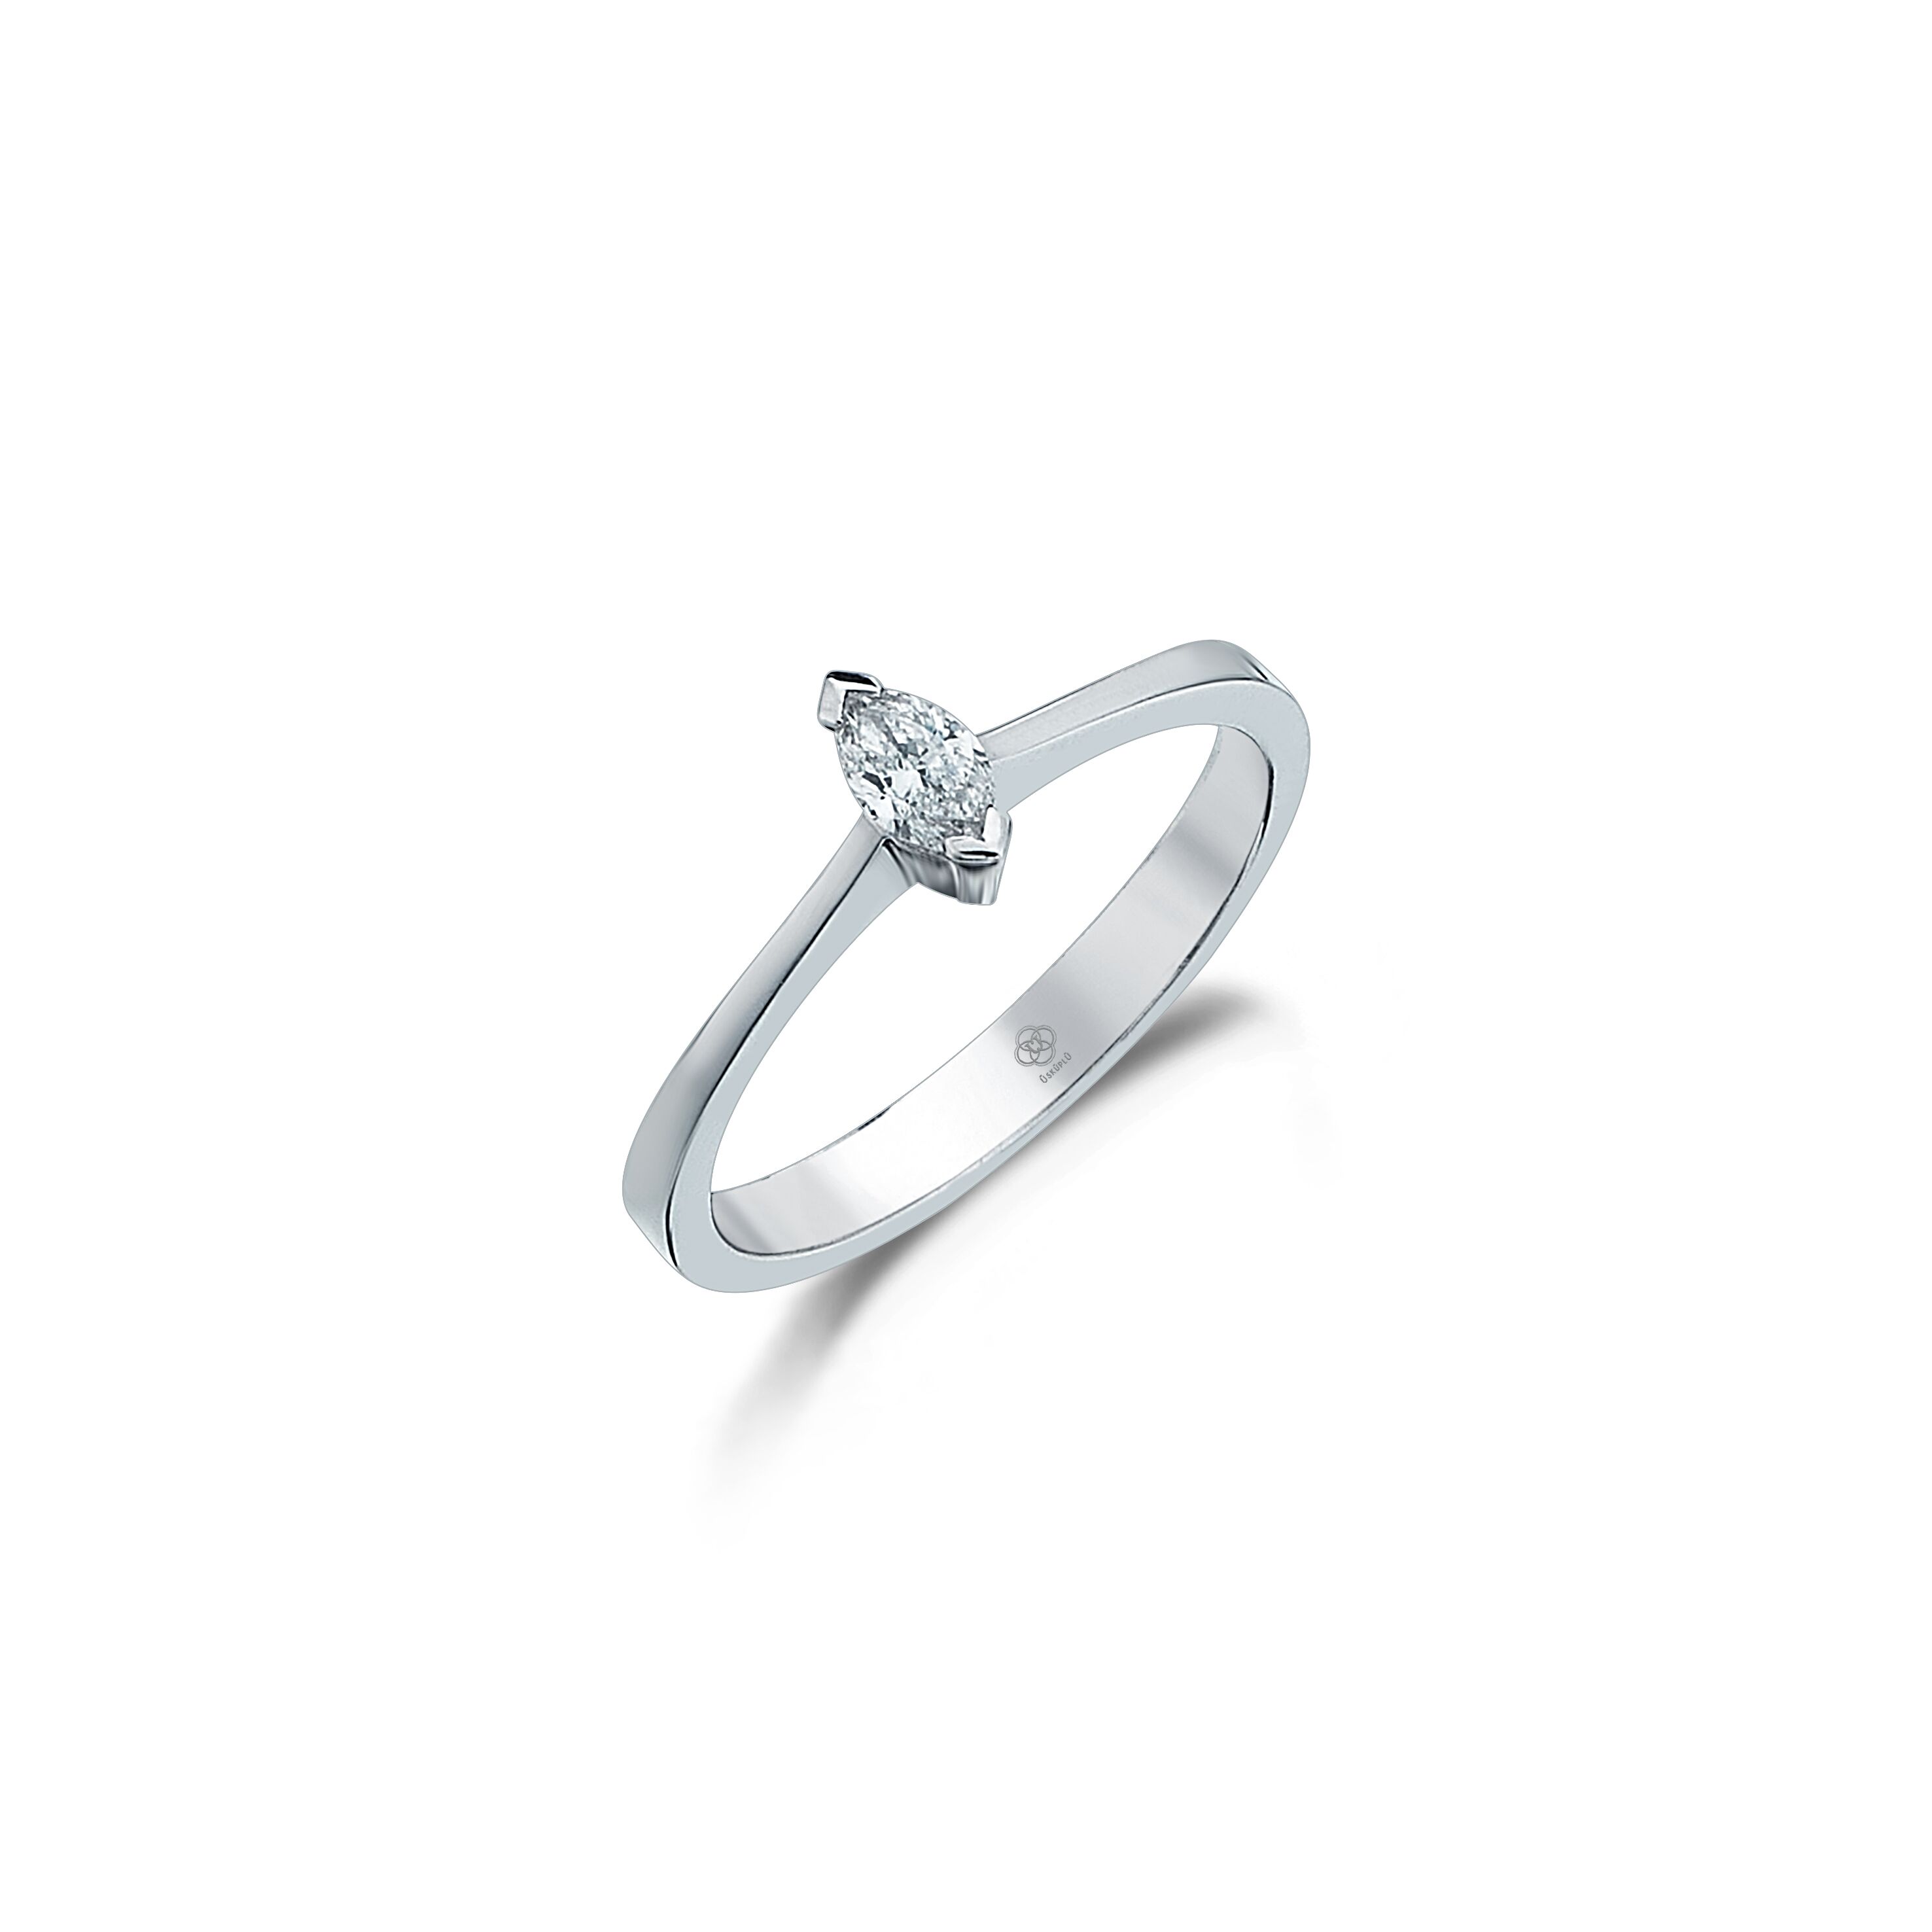 So Simple Marquise Diamond Ring - 1